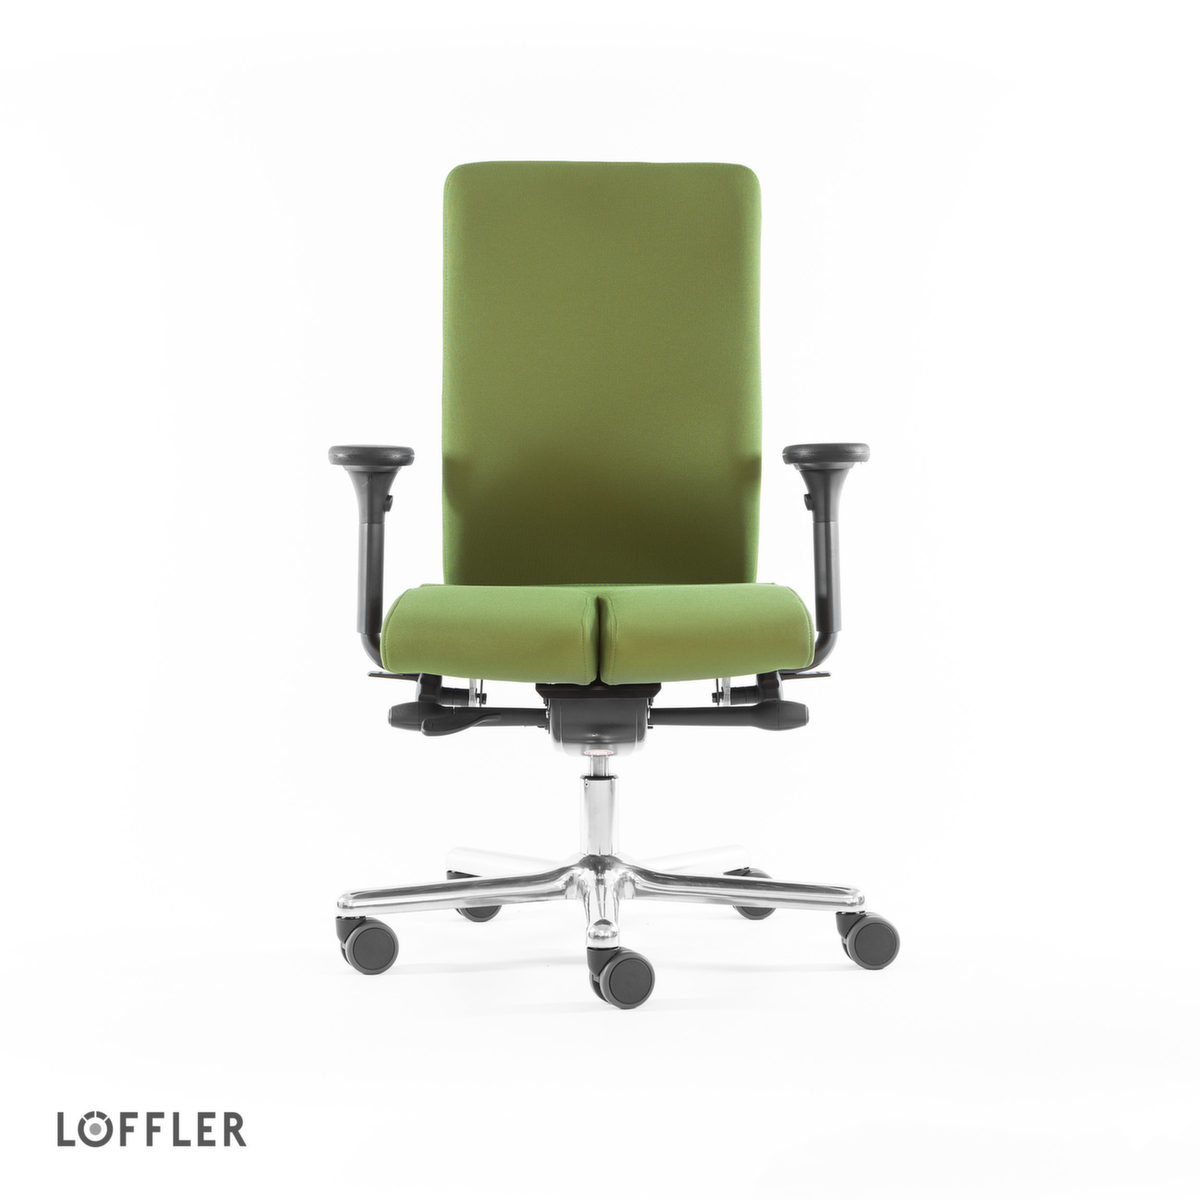 Löffler Bürodrehstuhl mit Arthrodesensitz, grün Standard 2 ZOOM